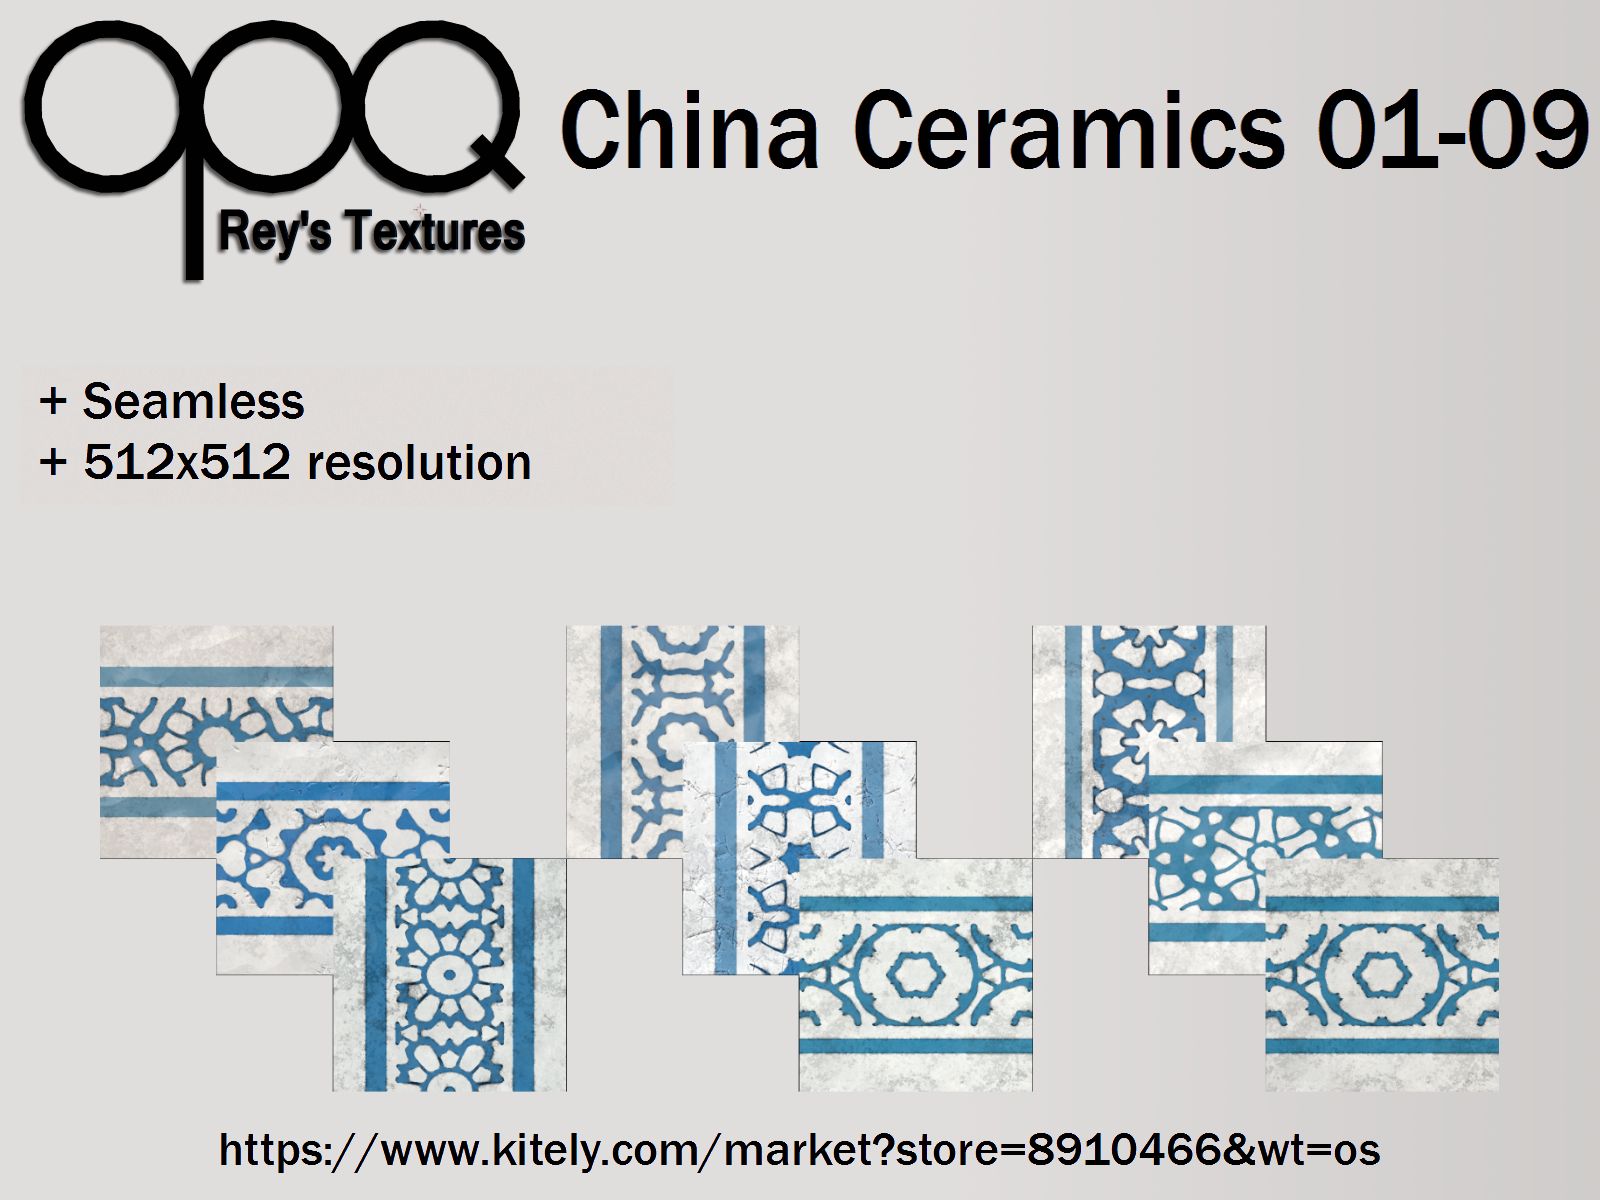 Rey's China Ceramics 01-09 Poster Kitely.jpg